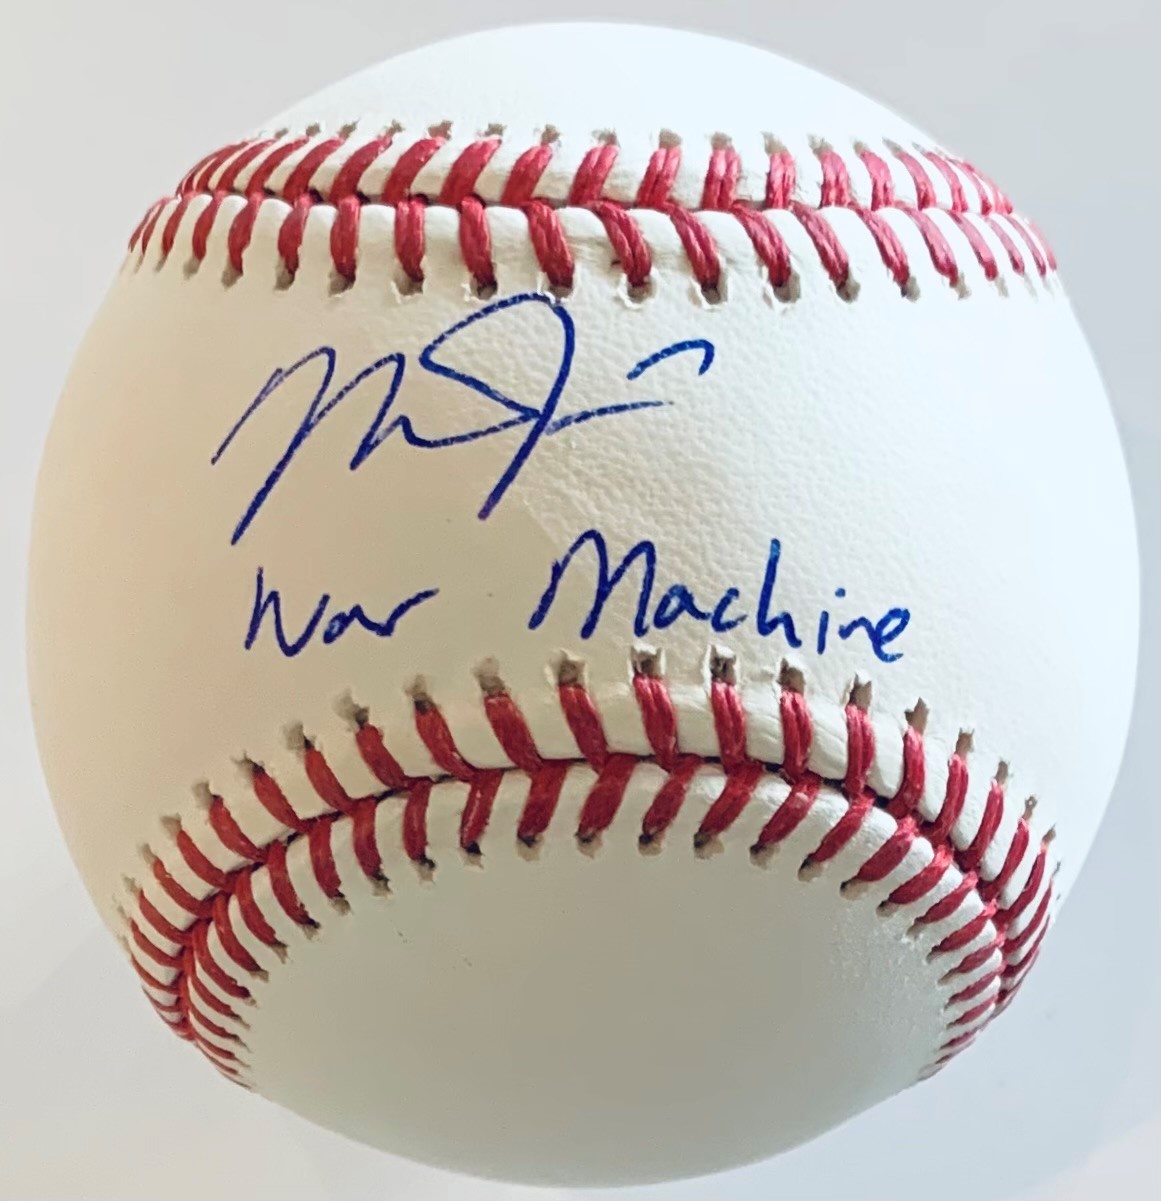 Mike Trout Signed Baseball - WAR Machine inscription - MLB holo